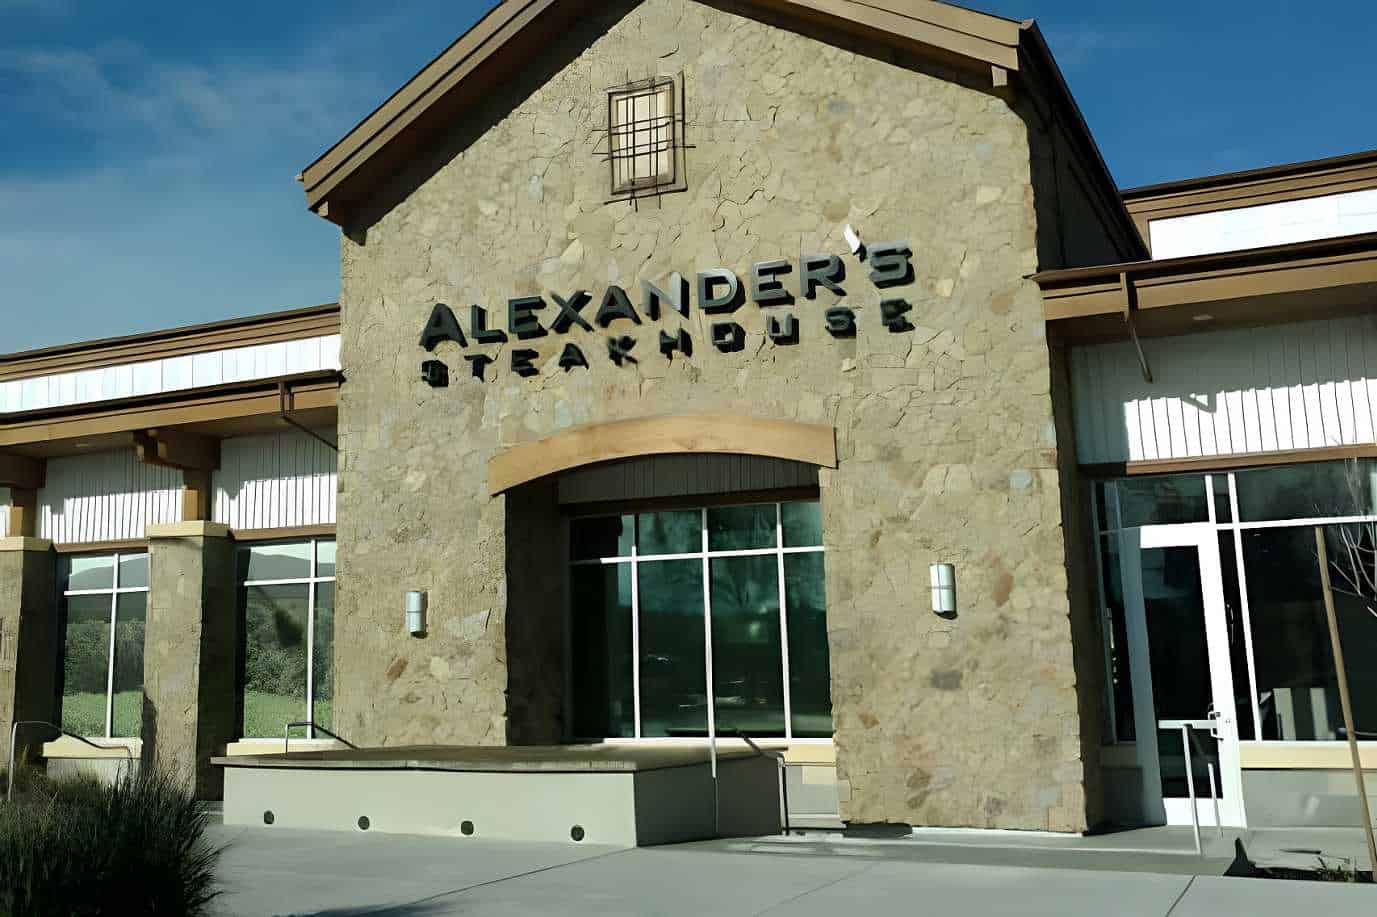 Alexander’s Steakhouse Best Restaurants in Cupertino, CA